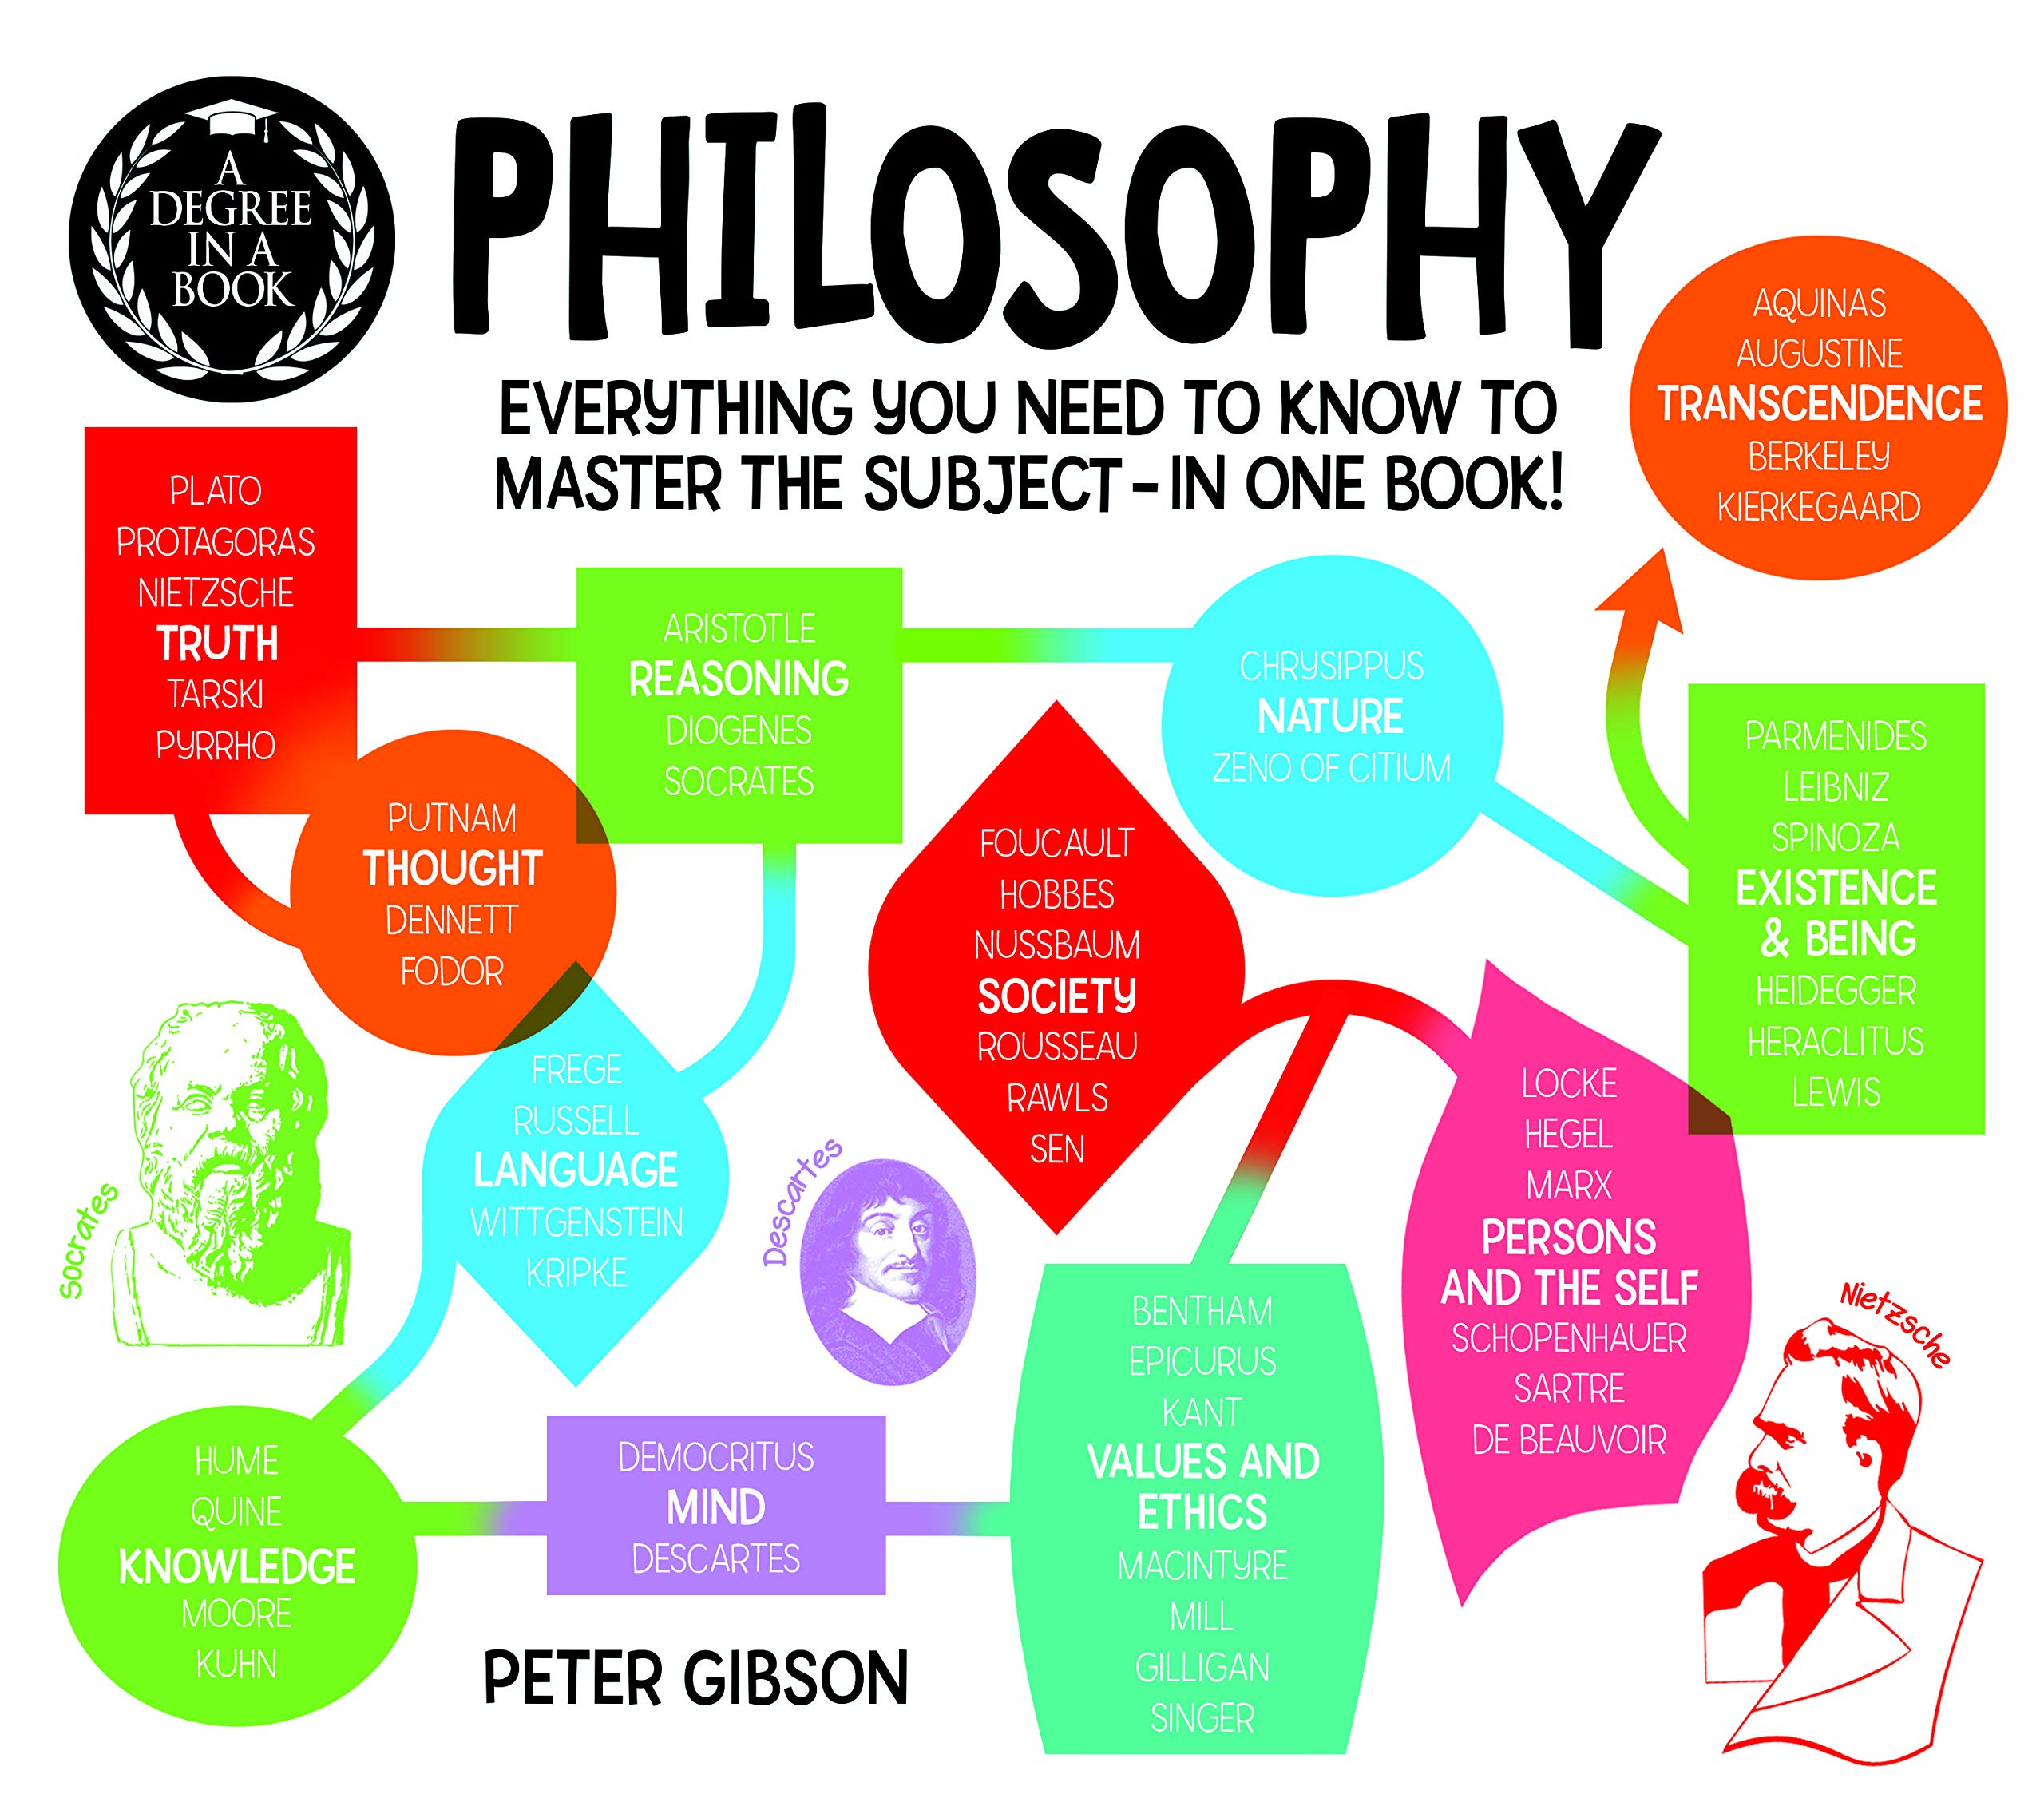 philosophy degree dissertation topics